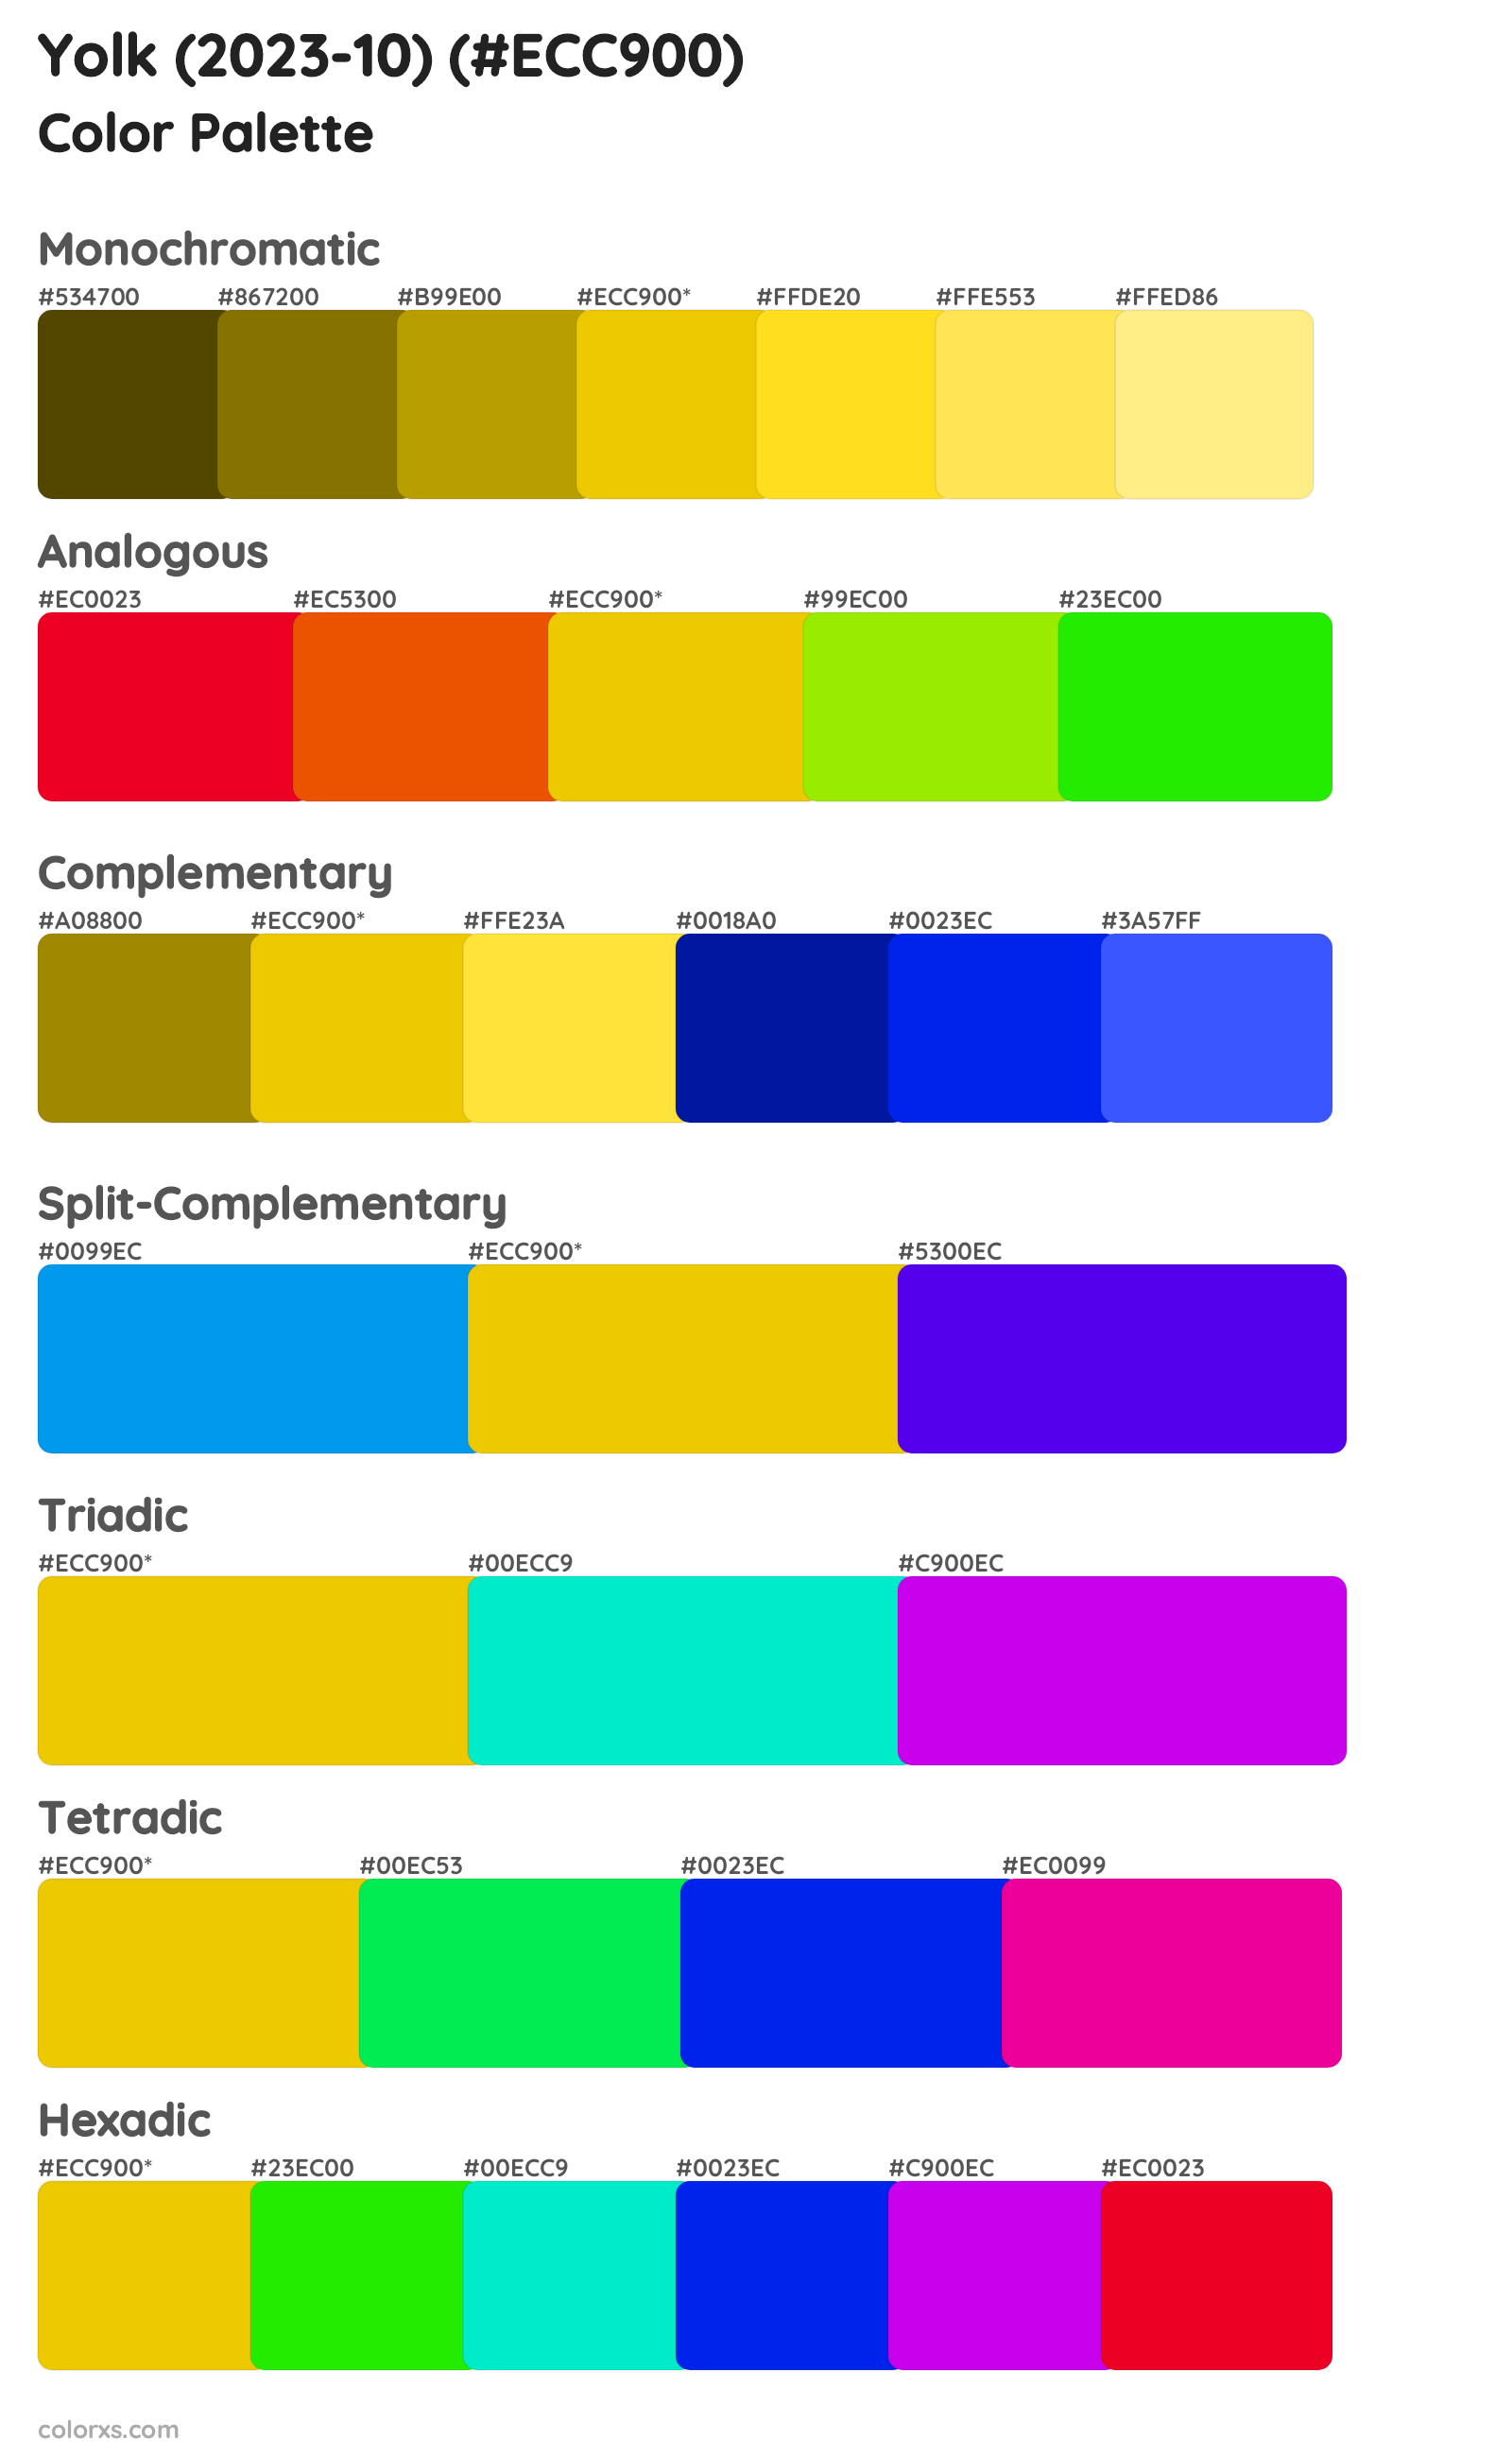 Yolk (2023-10) Color Scheme Palettes